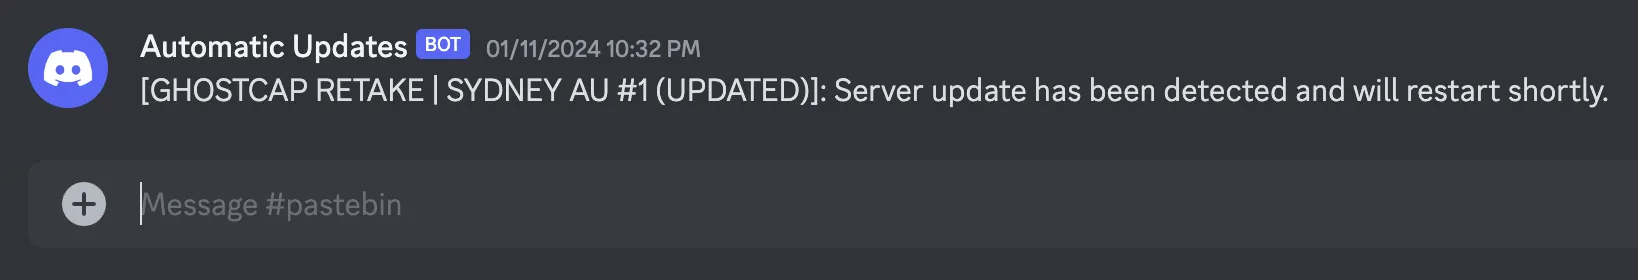 CS2 Automatic Updates Discord